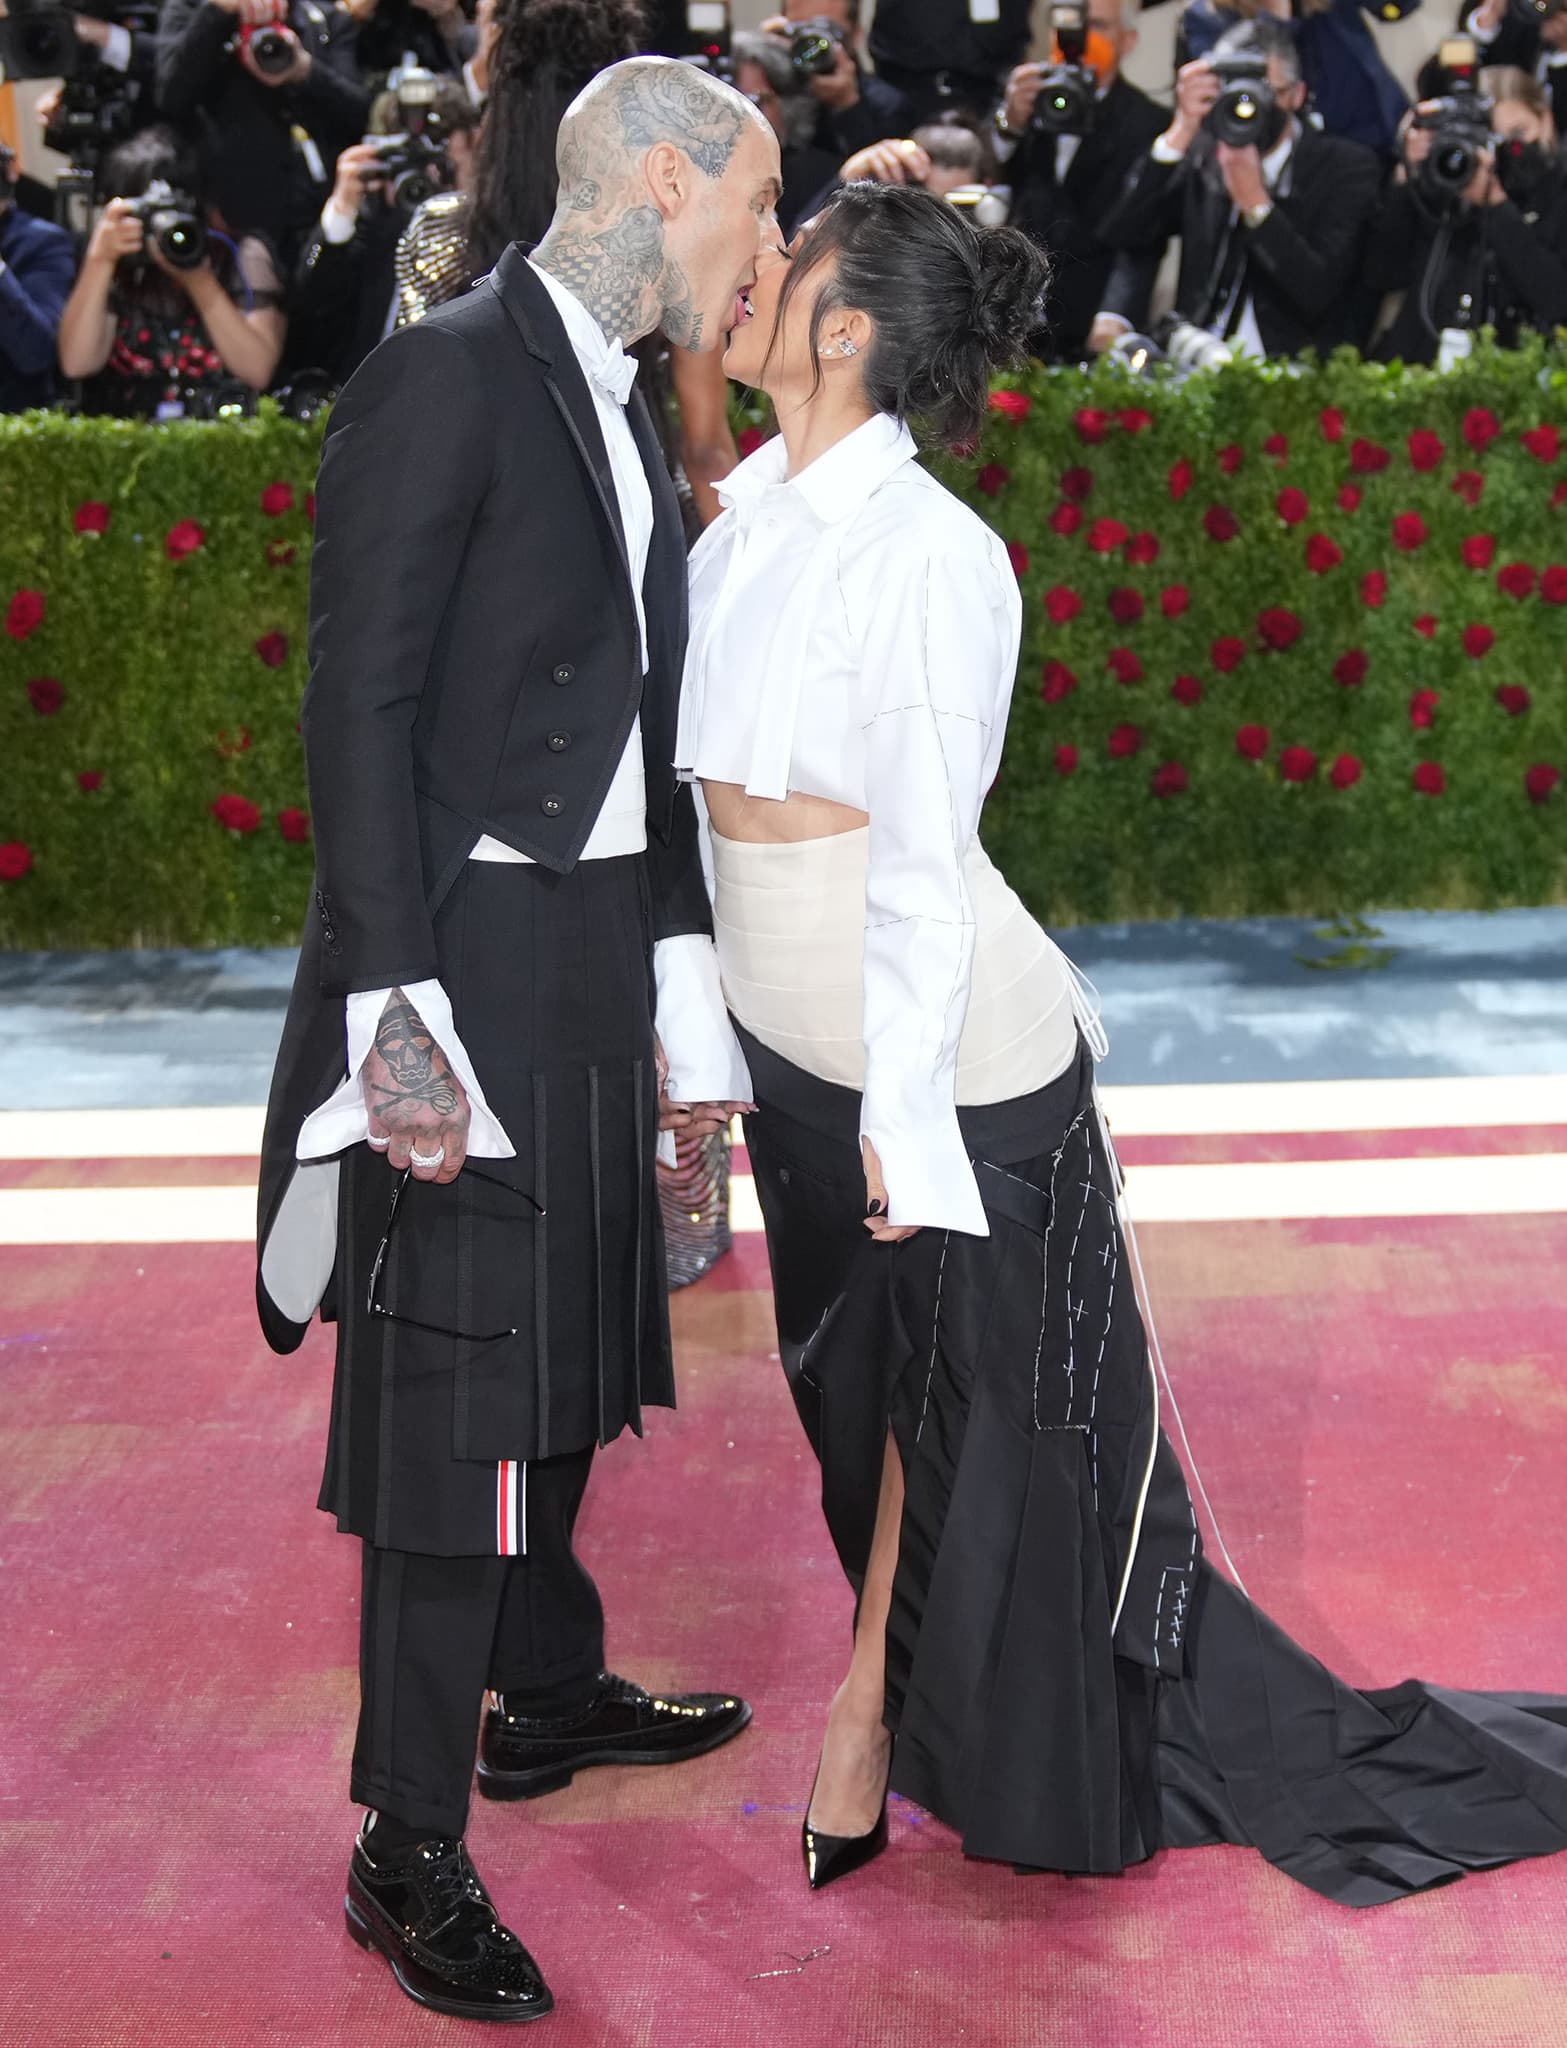 Travis Barker and Kourtney Kardashian share sloppy kisses at the Met Gala on May 2, 2022